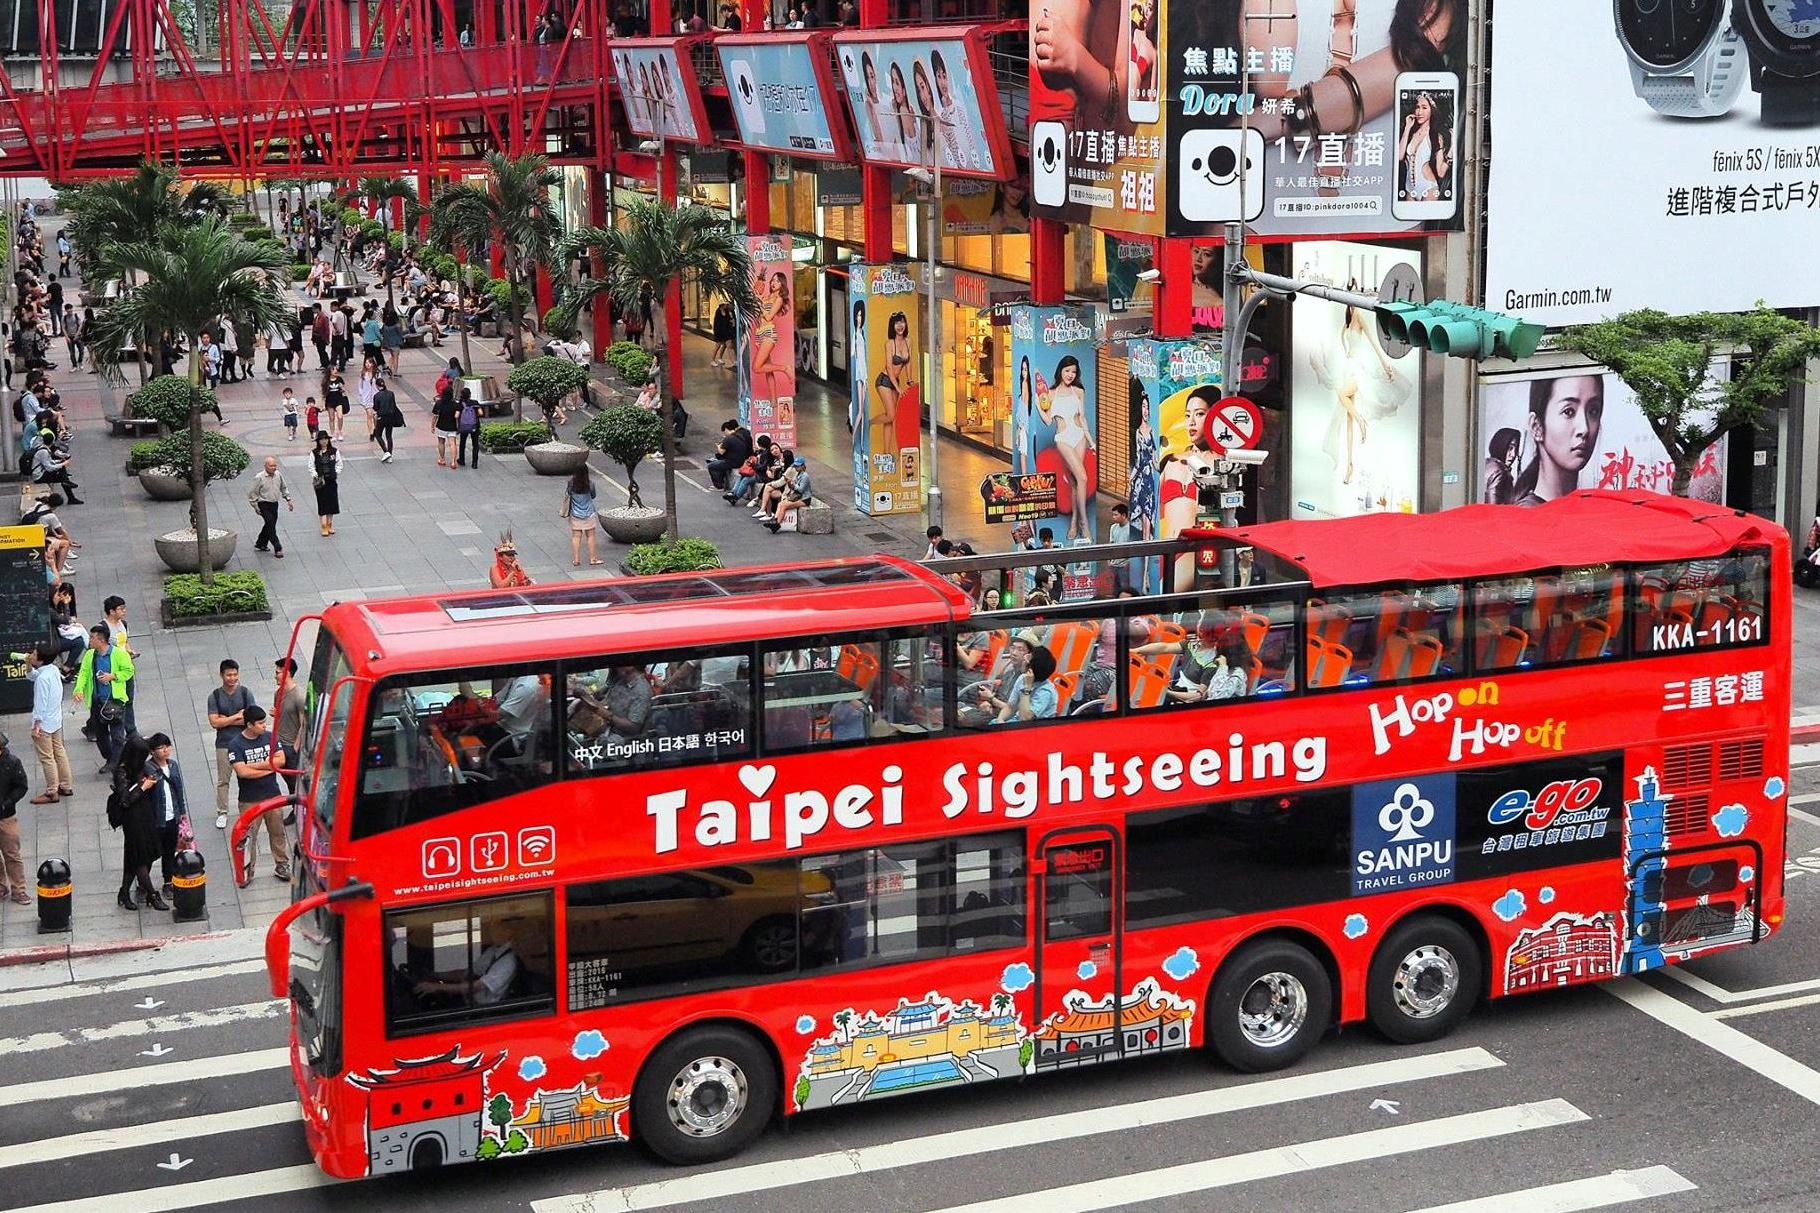 Ônibus turístico de Taipei